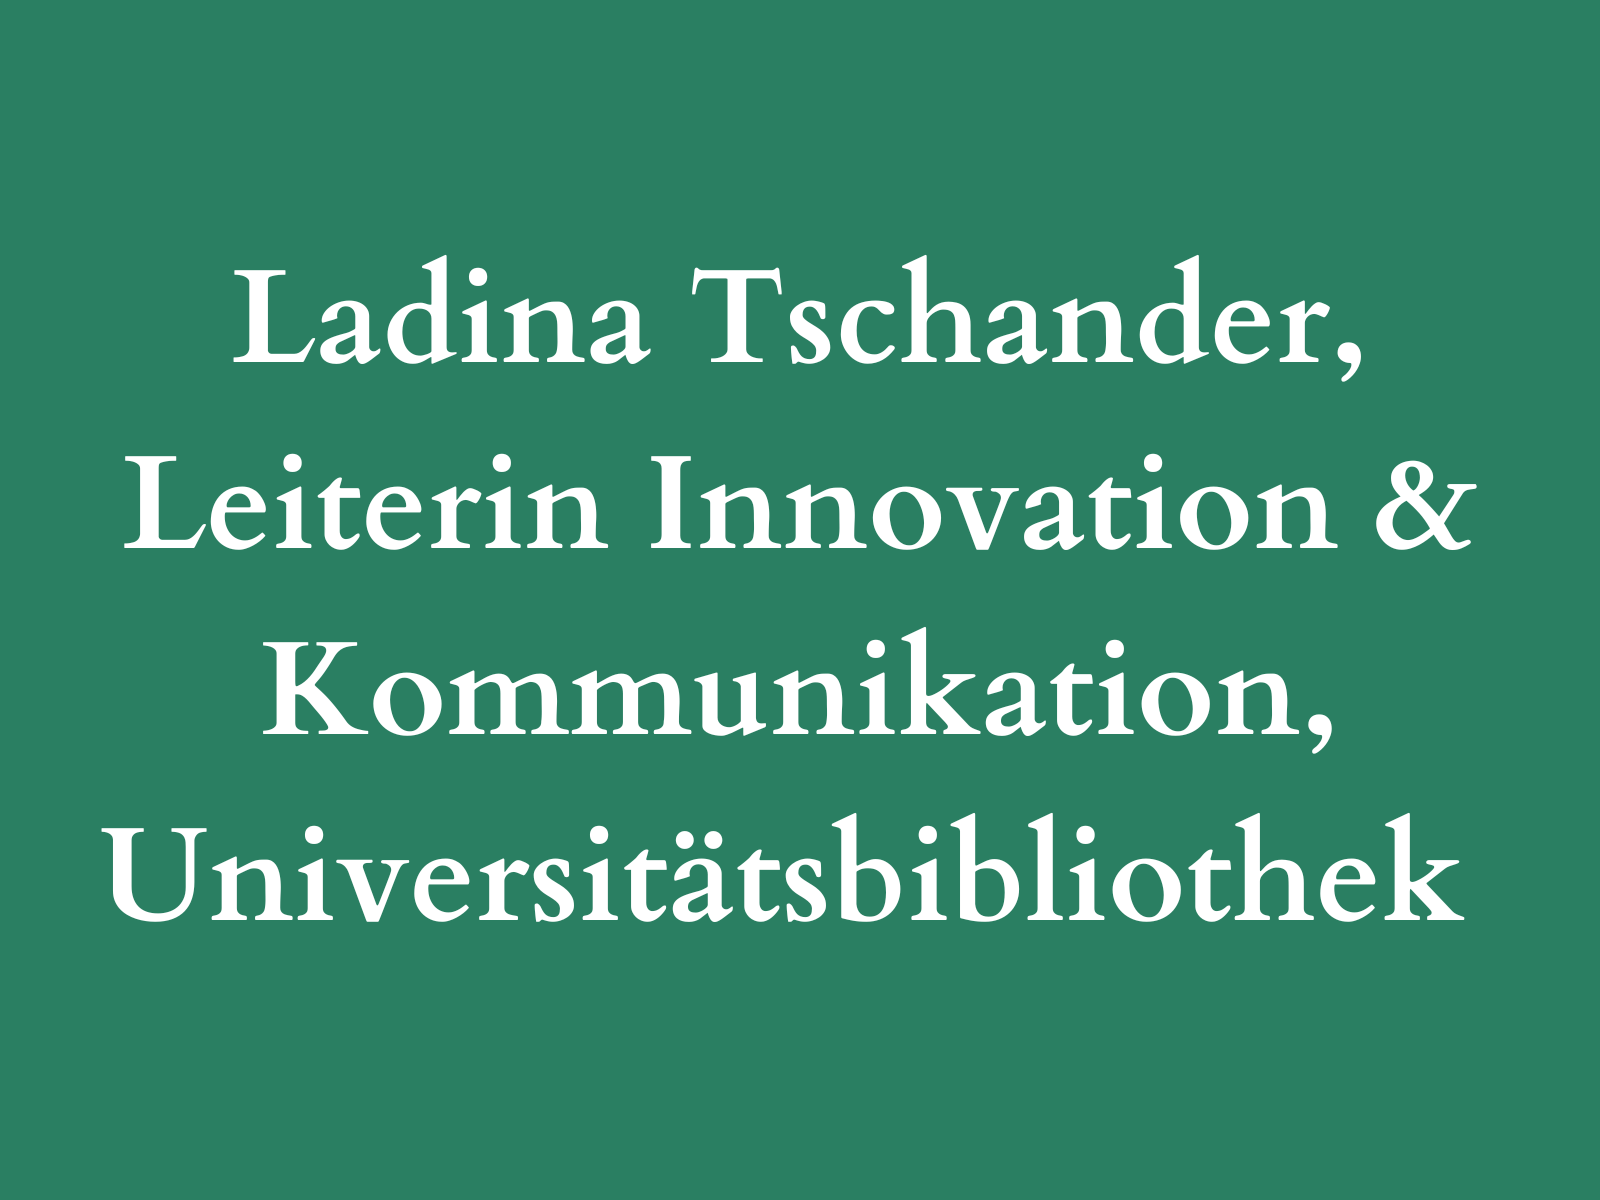 Testimonial Ladina Tschander